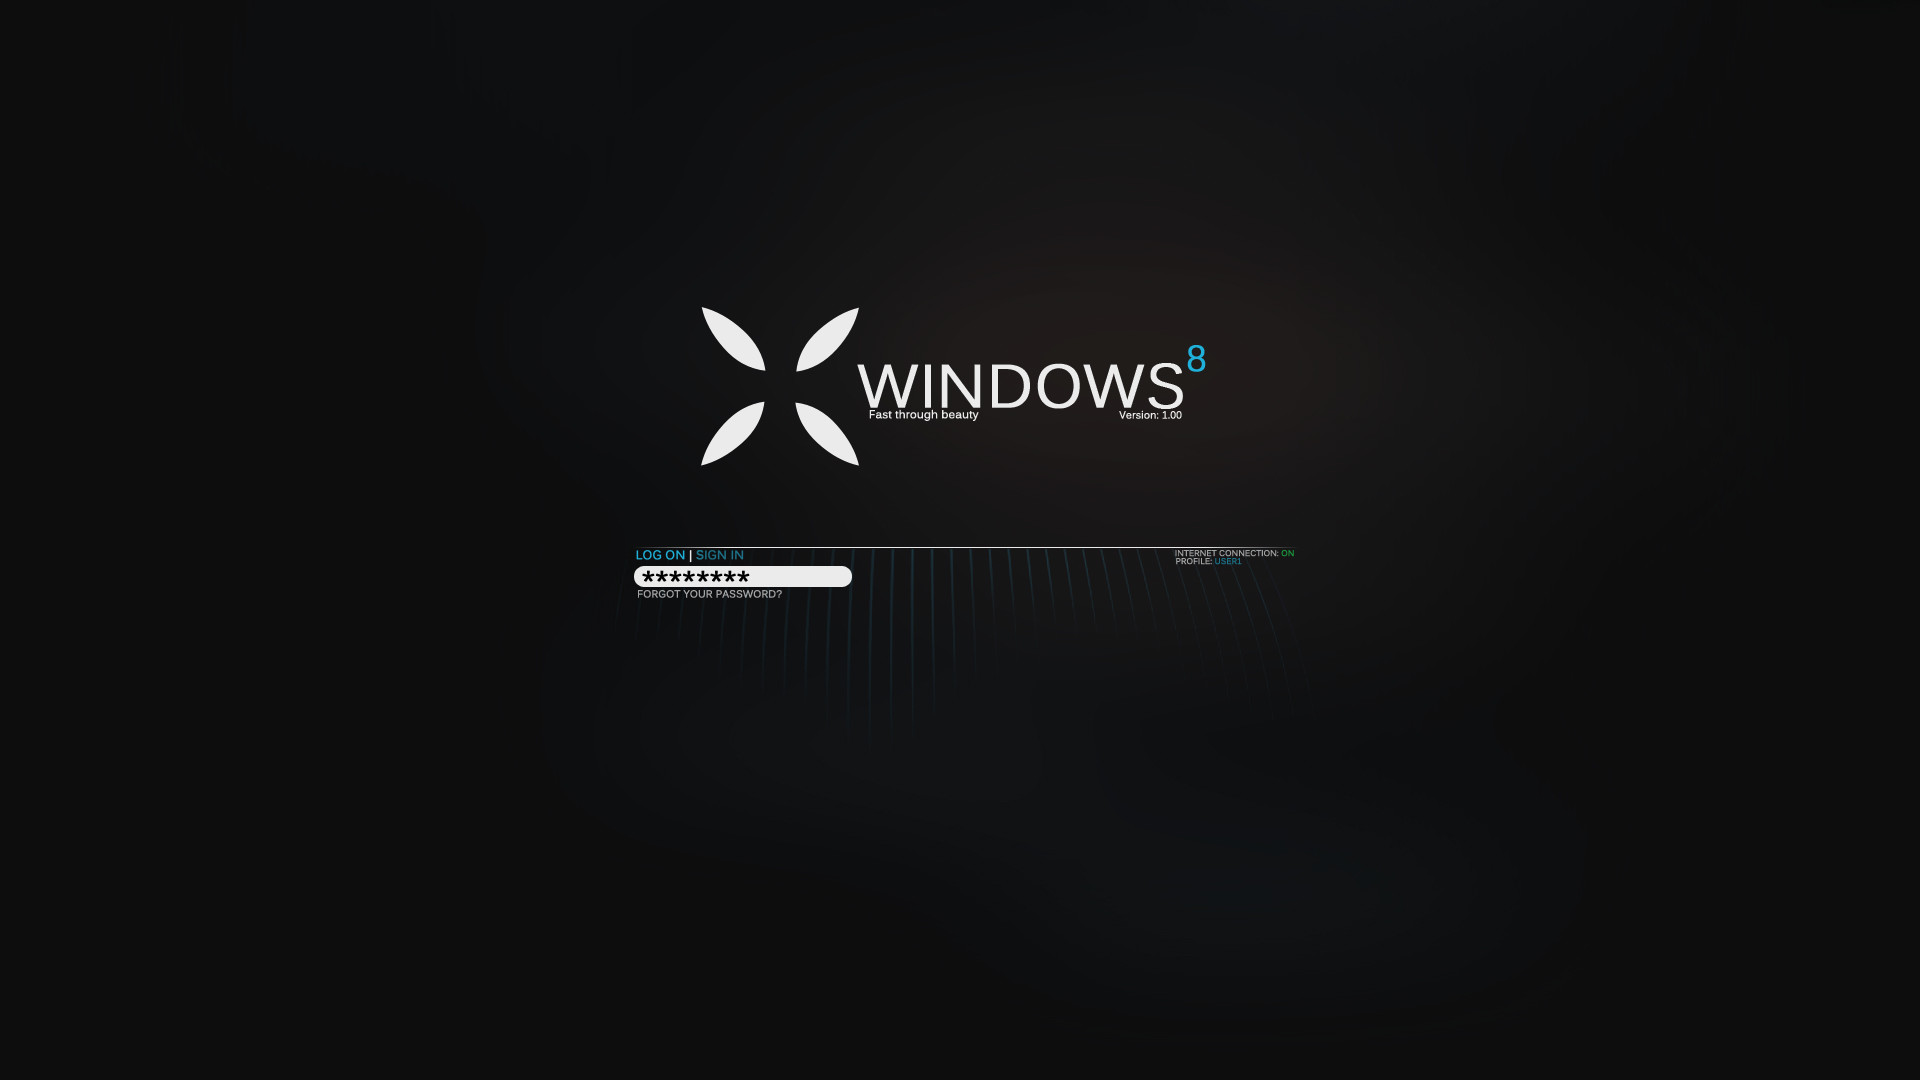 1920x1080 Microsoft Wallpaper Themes Windows 8